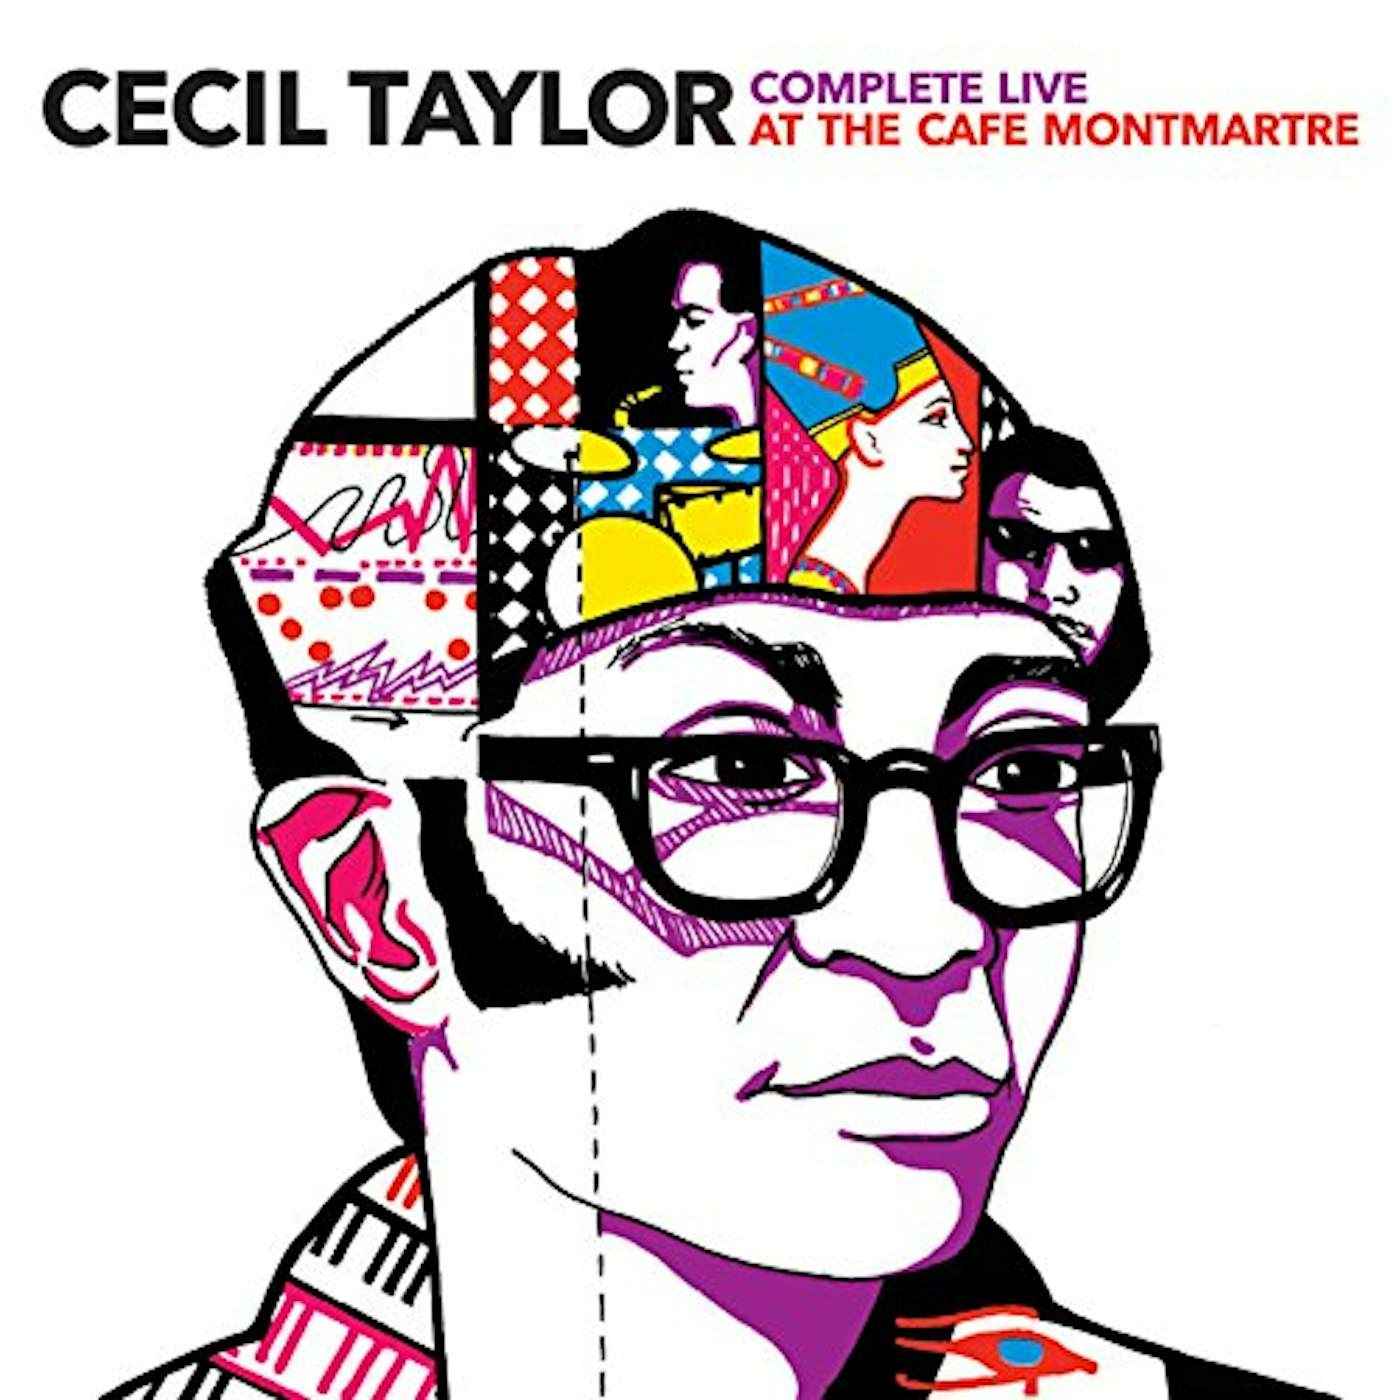 Cecil Taylor COMPLETE LIVE AT CAFE MONTMARTRE CD